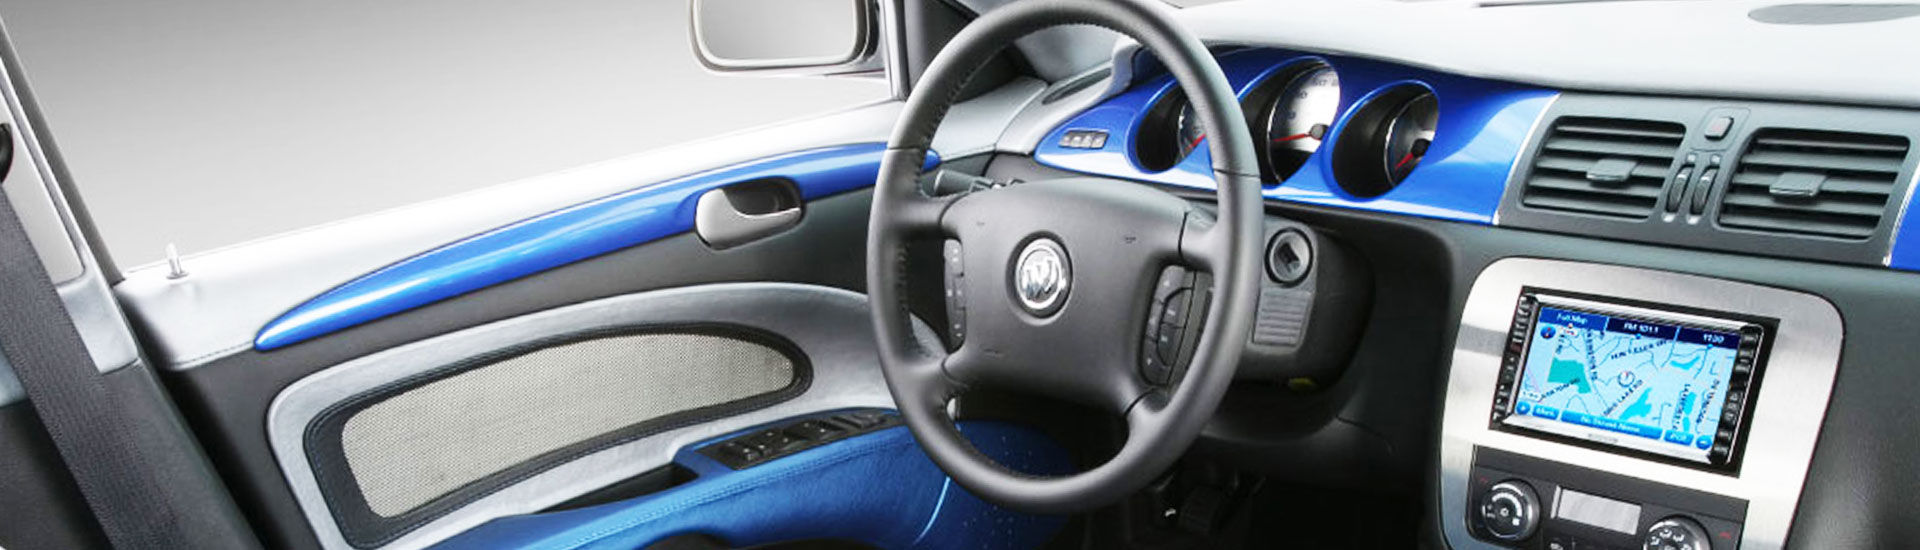 2014 Buick Regal Dash Kits